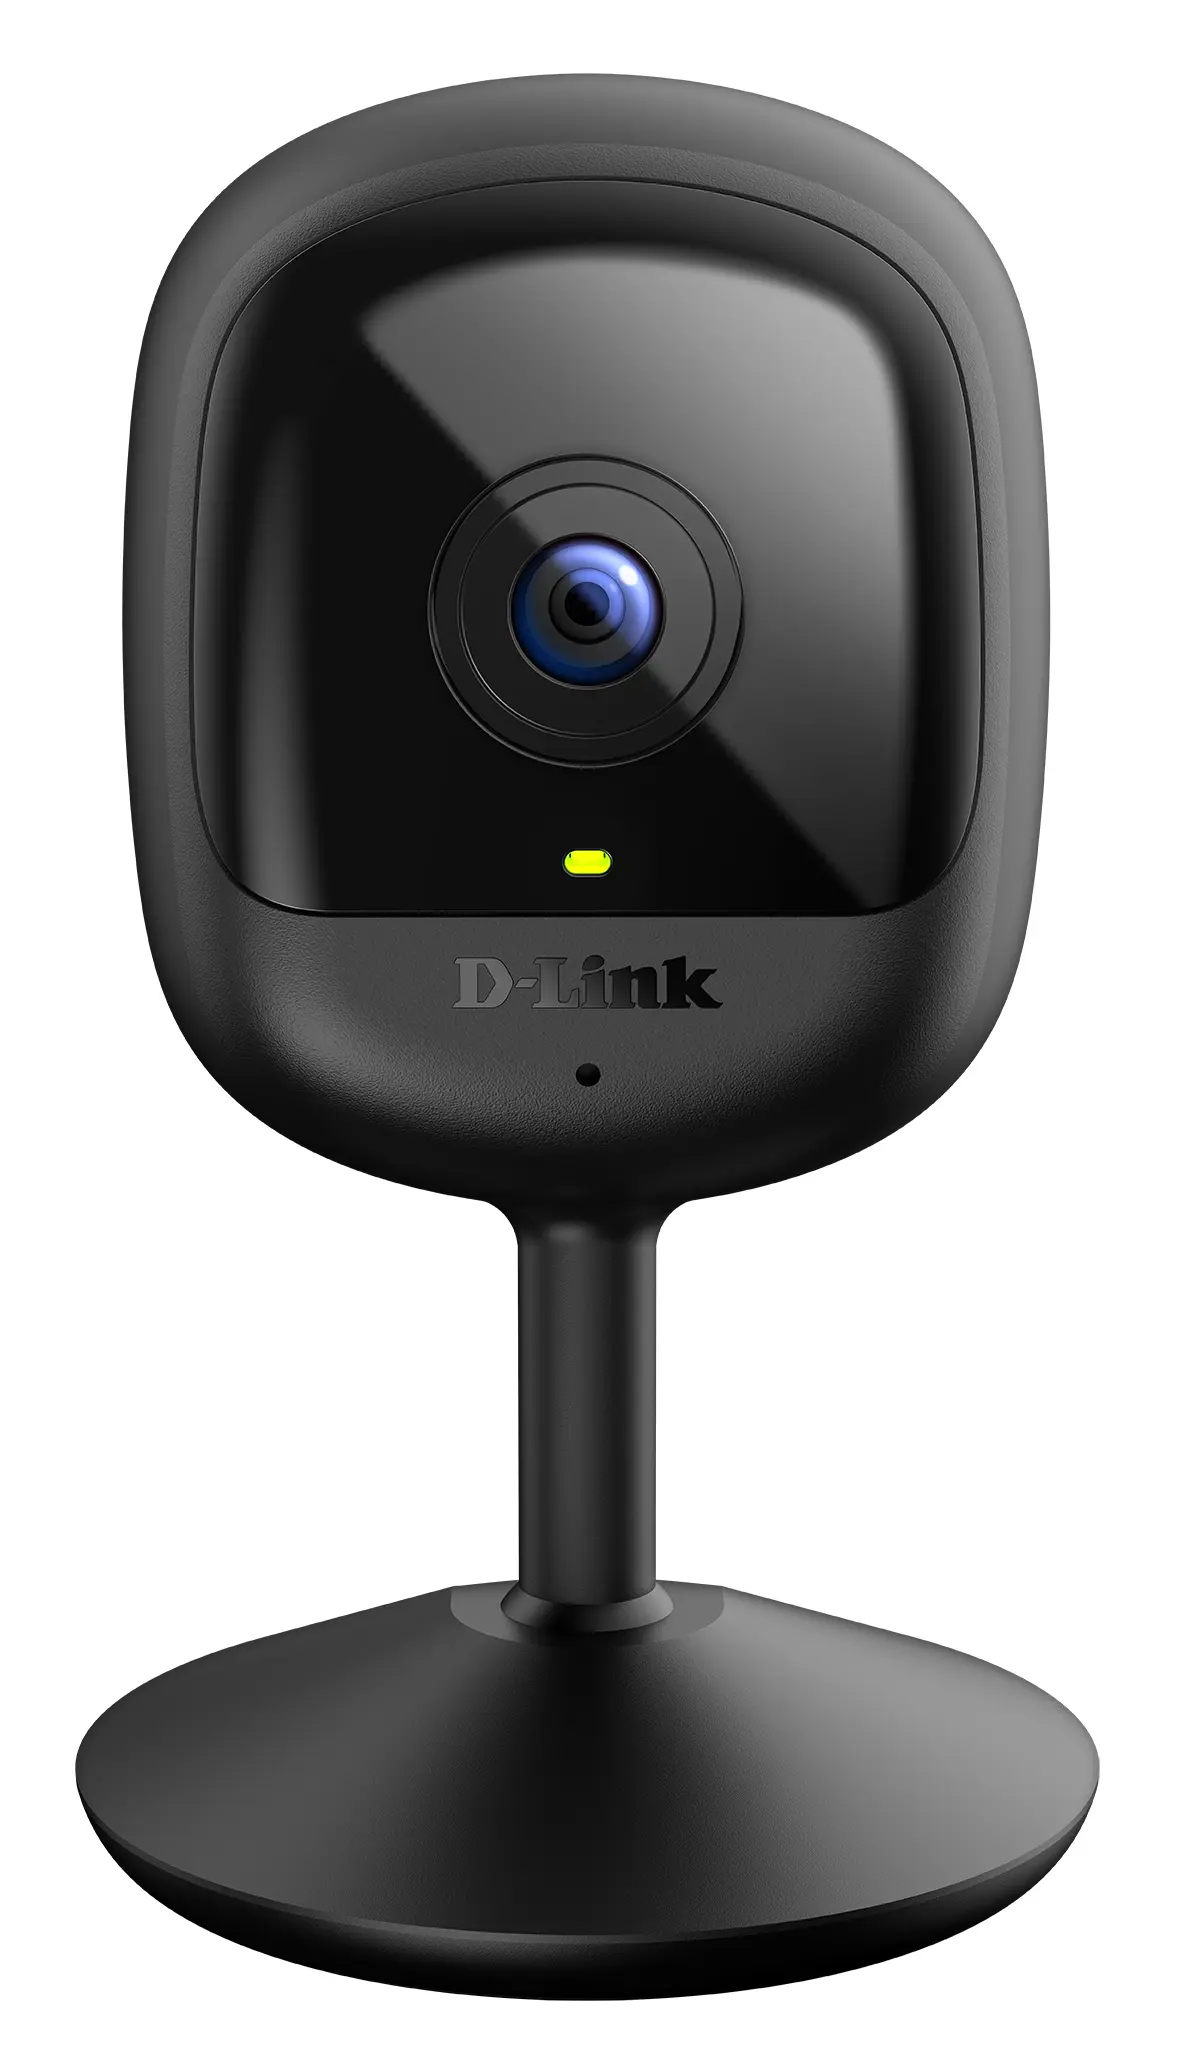 D-Link Camara de Vigilancia Compact WiFi FullHD 1080p - Vision Nocturna - Angulo de Vision 110 - De